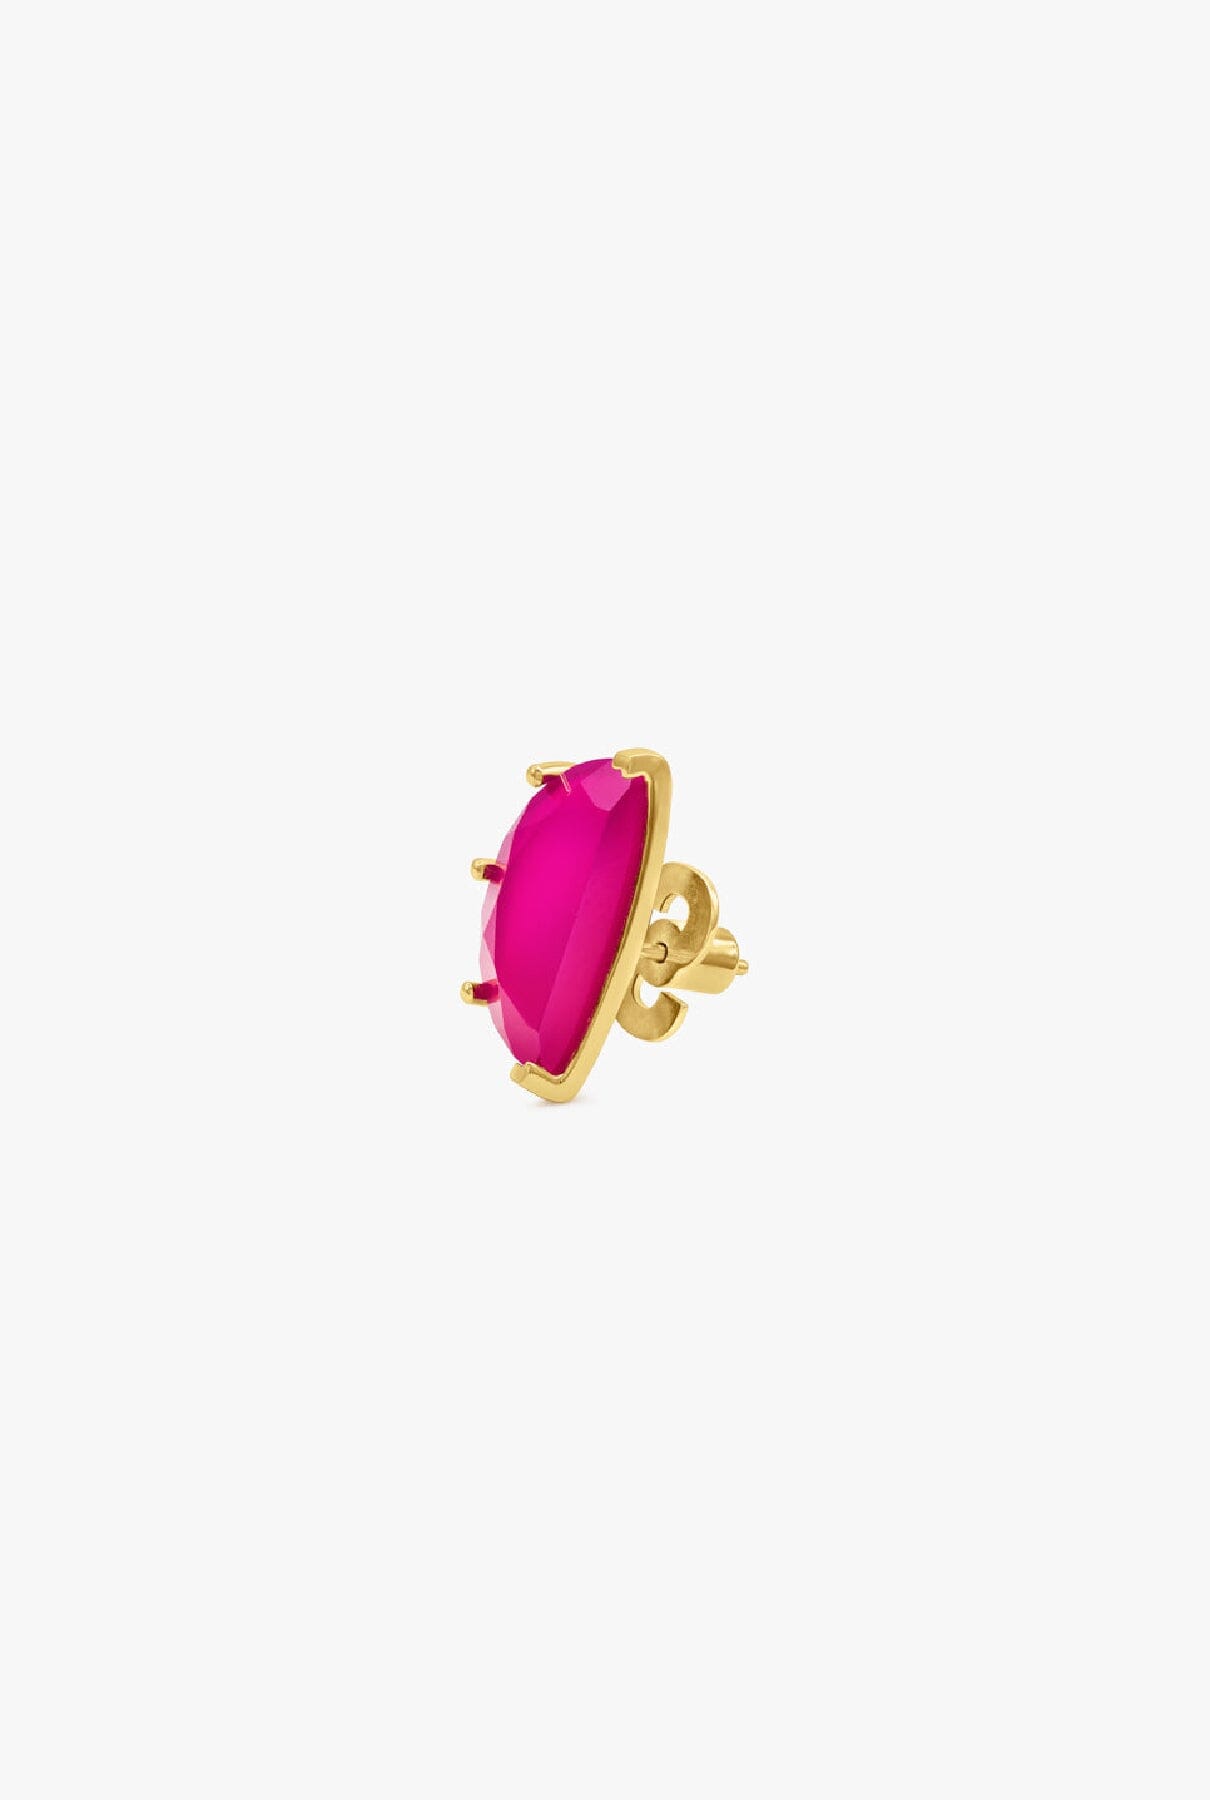 Half Cut Vibrant Large Pink Chalcedony Earring Earring Suot Studio 